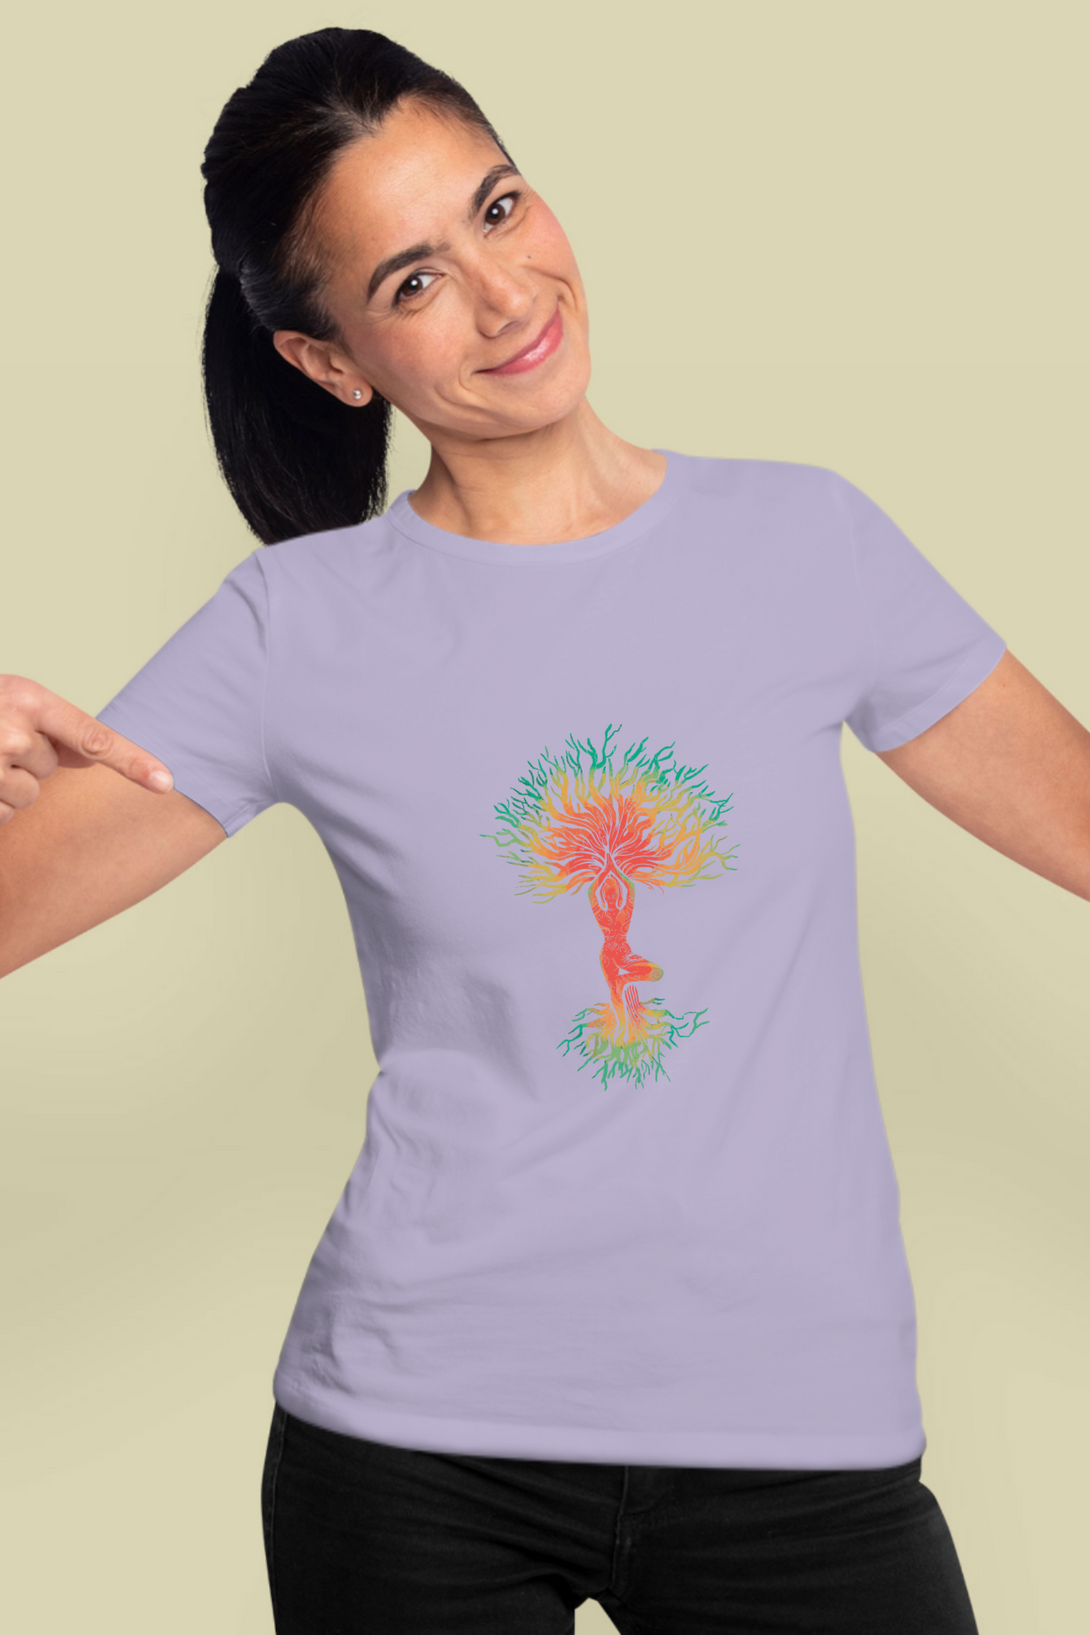 Yoga Tree Printed T-Shirt For Women - WowWaves - 10